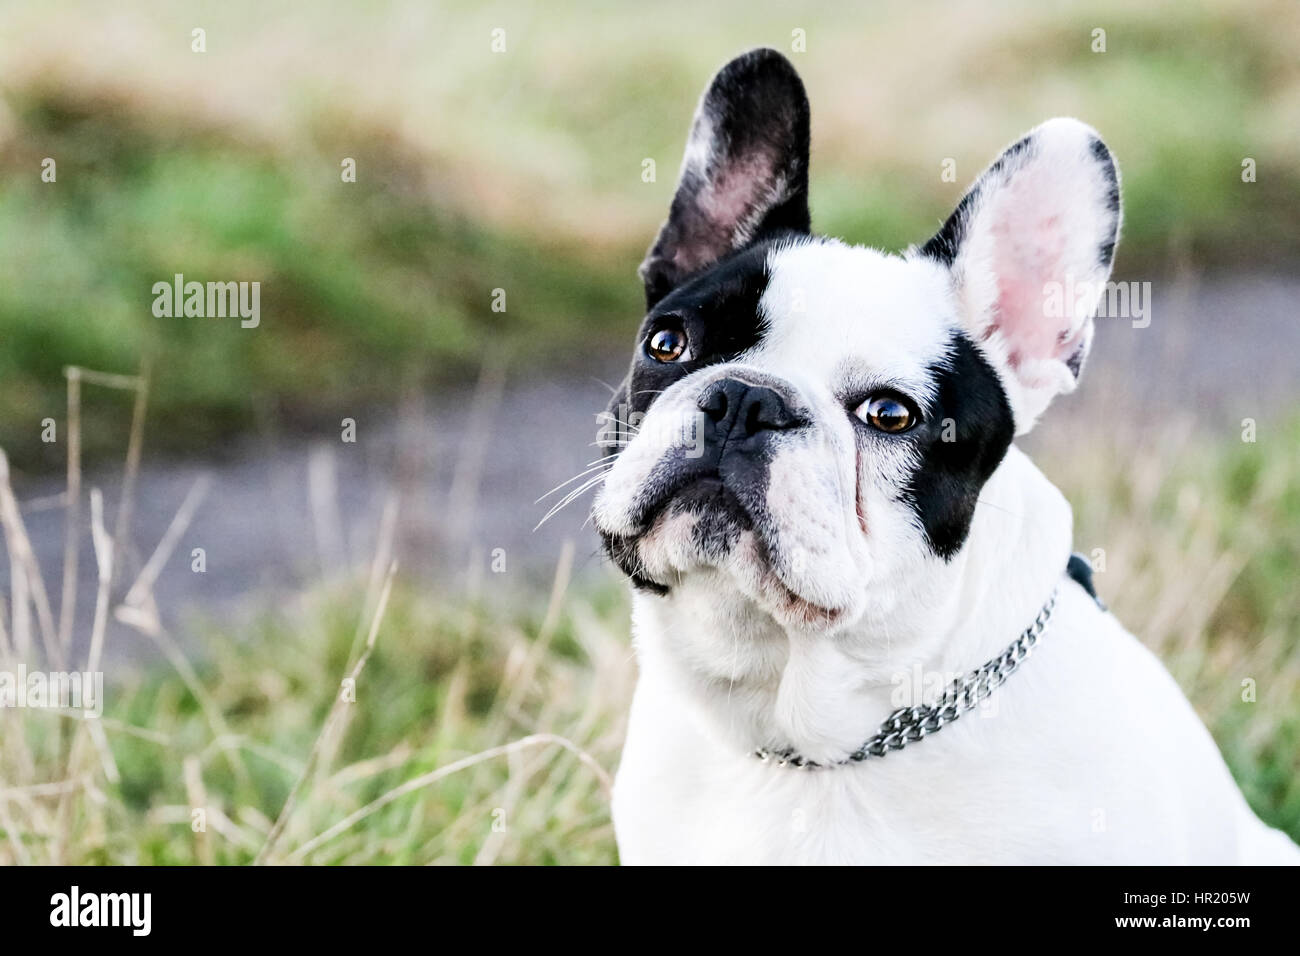 Black and White French Bulldog portrait Stock Photo - Alamy